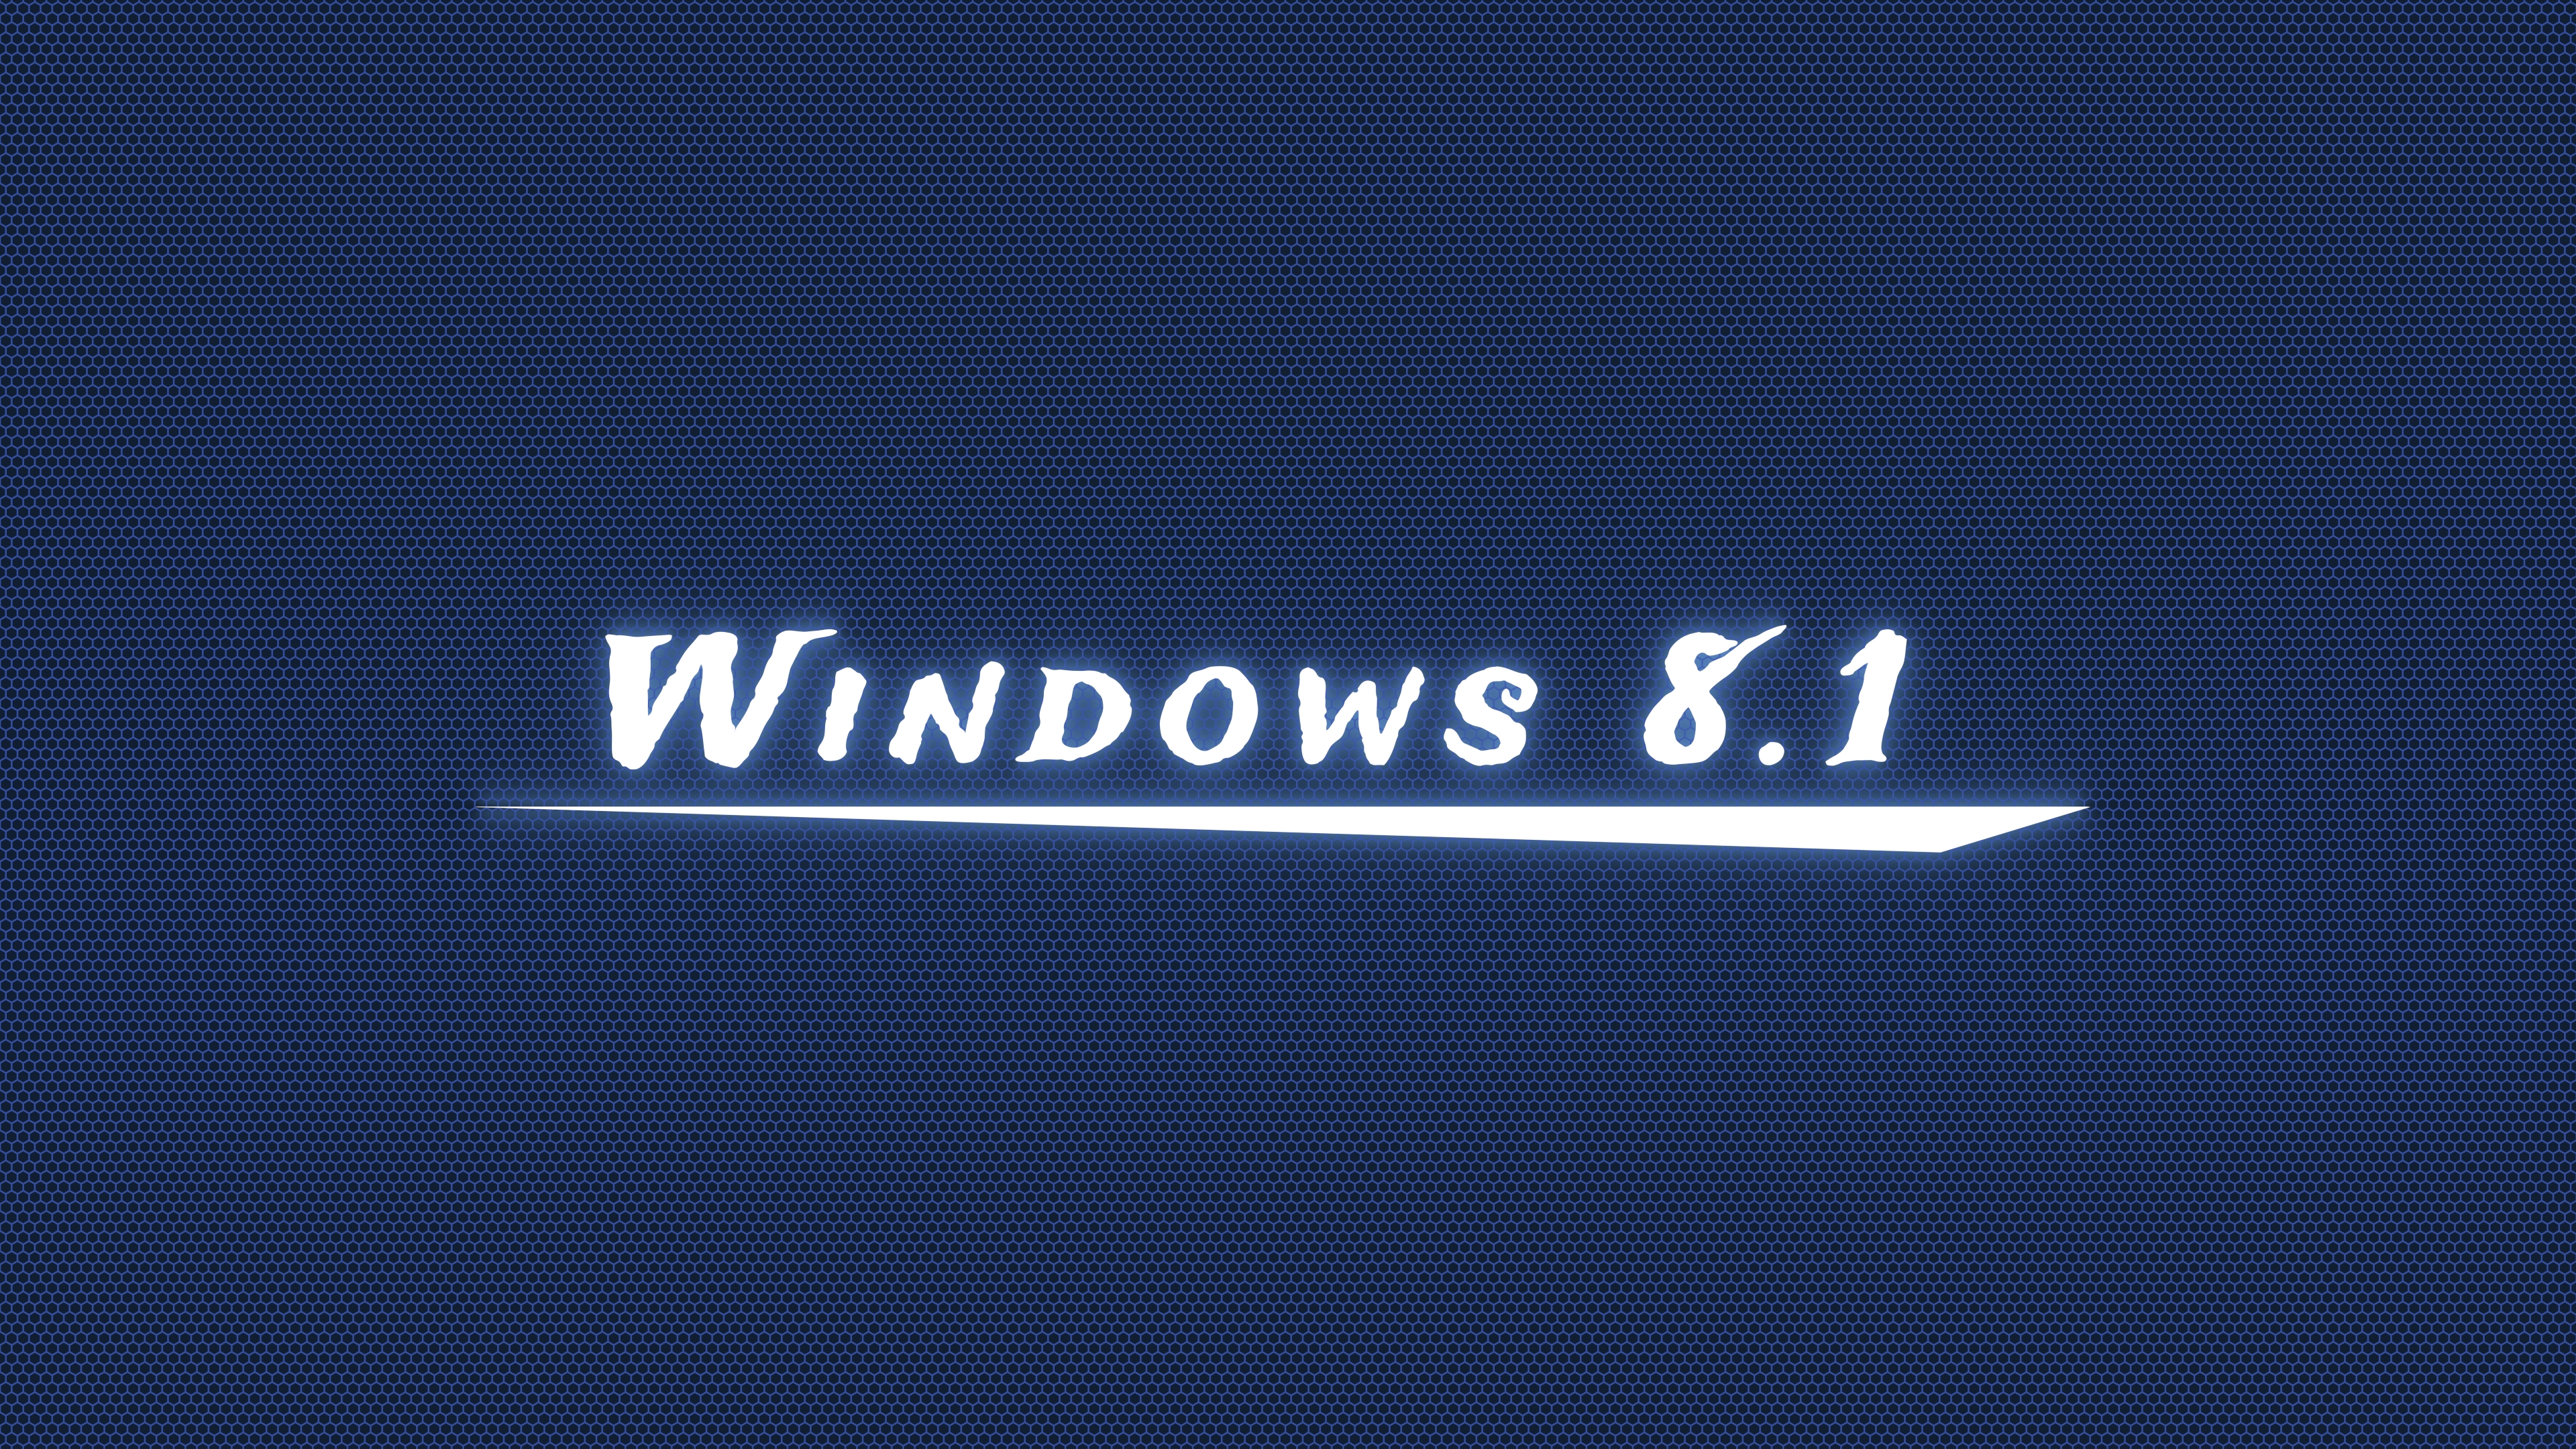 technology, windows 8 1, computer, microsoft, operating system, windows